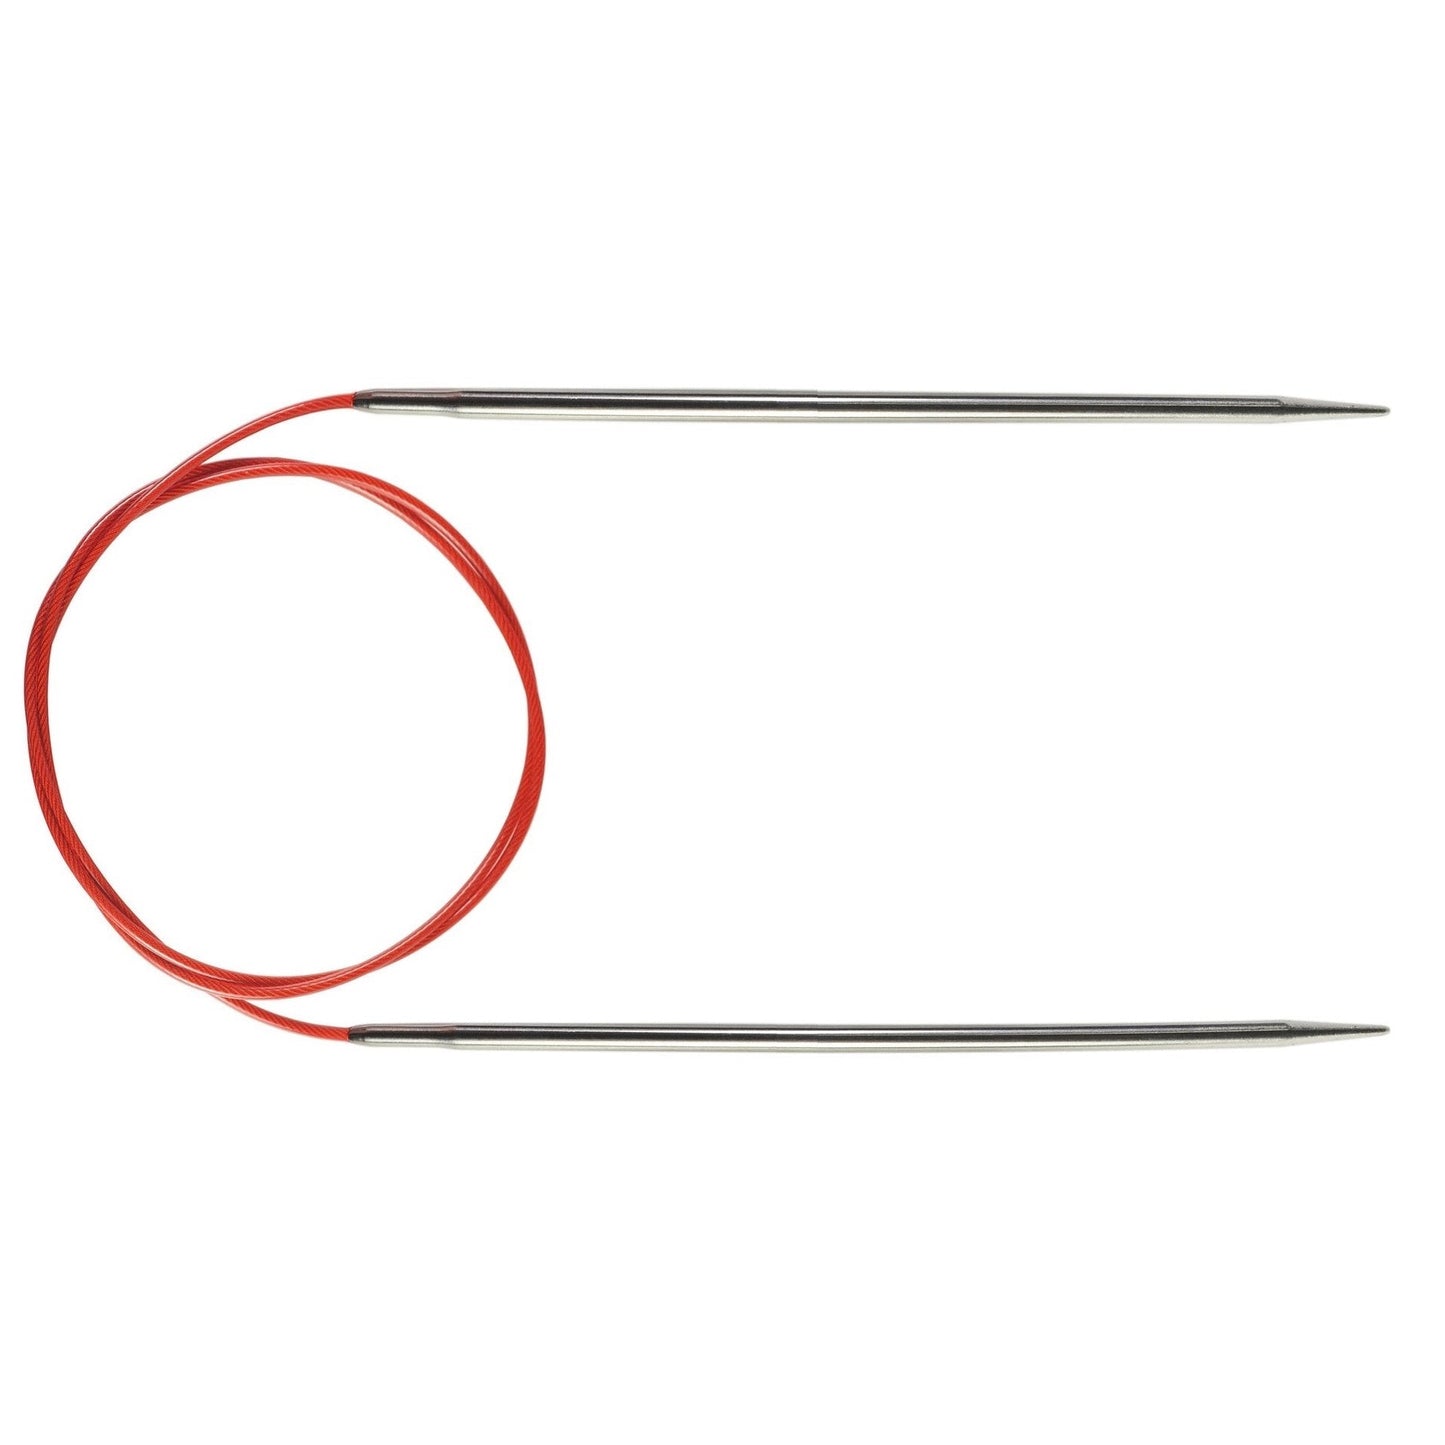 Red lace Circular needles - 40cm (16") at Wabi Sabi